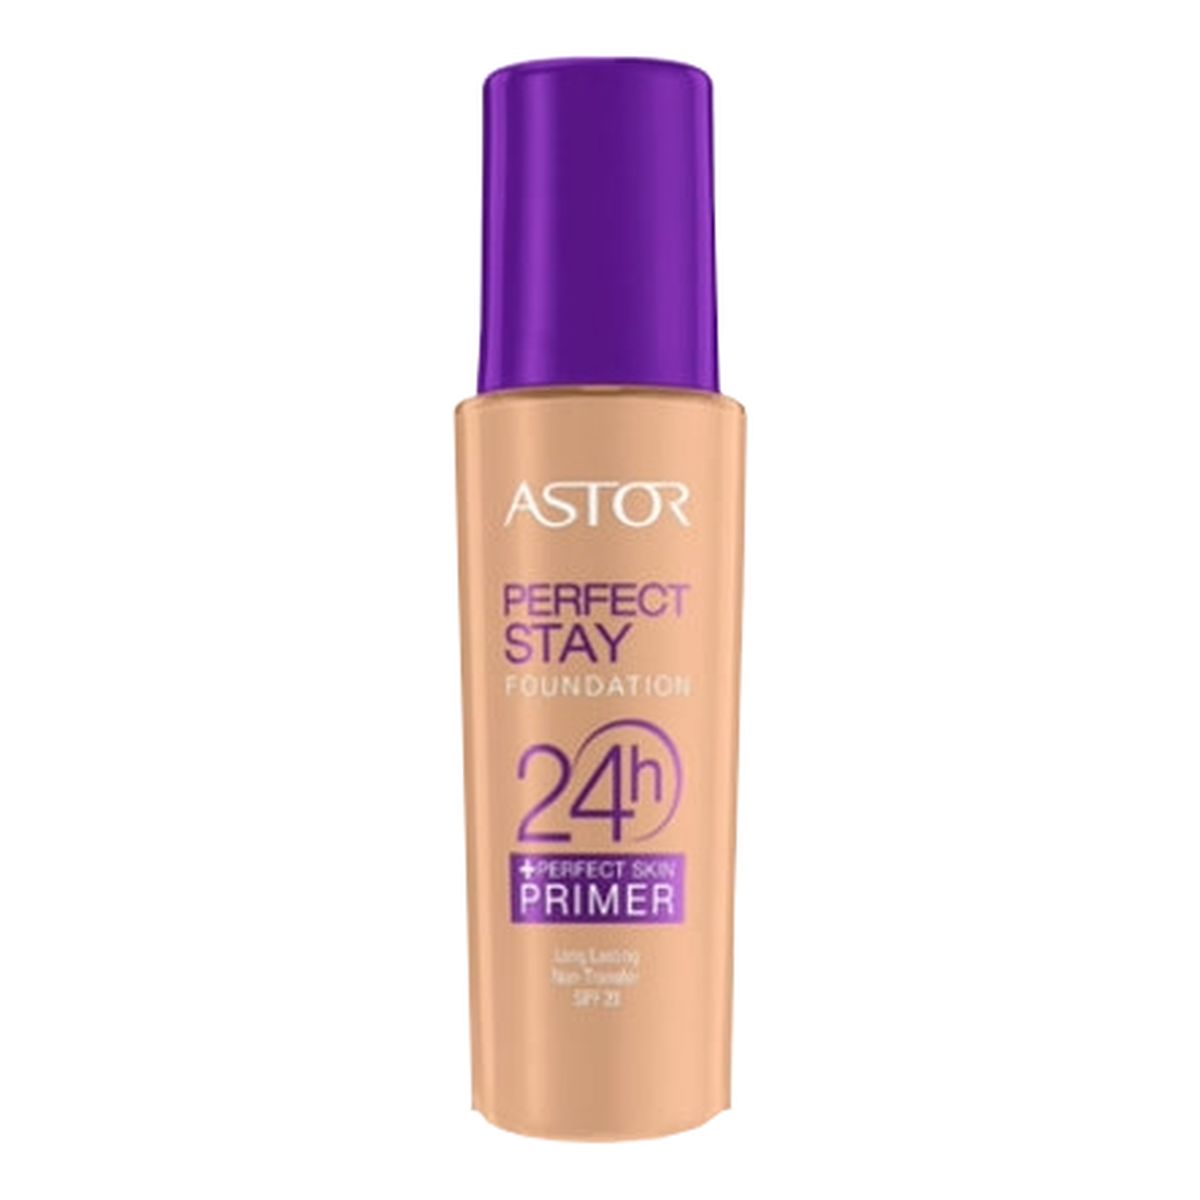 Astor Perfect Stay 24H Foundation + Perfect Skin Primer SPF20 podkład do twarzy i baza 30ml